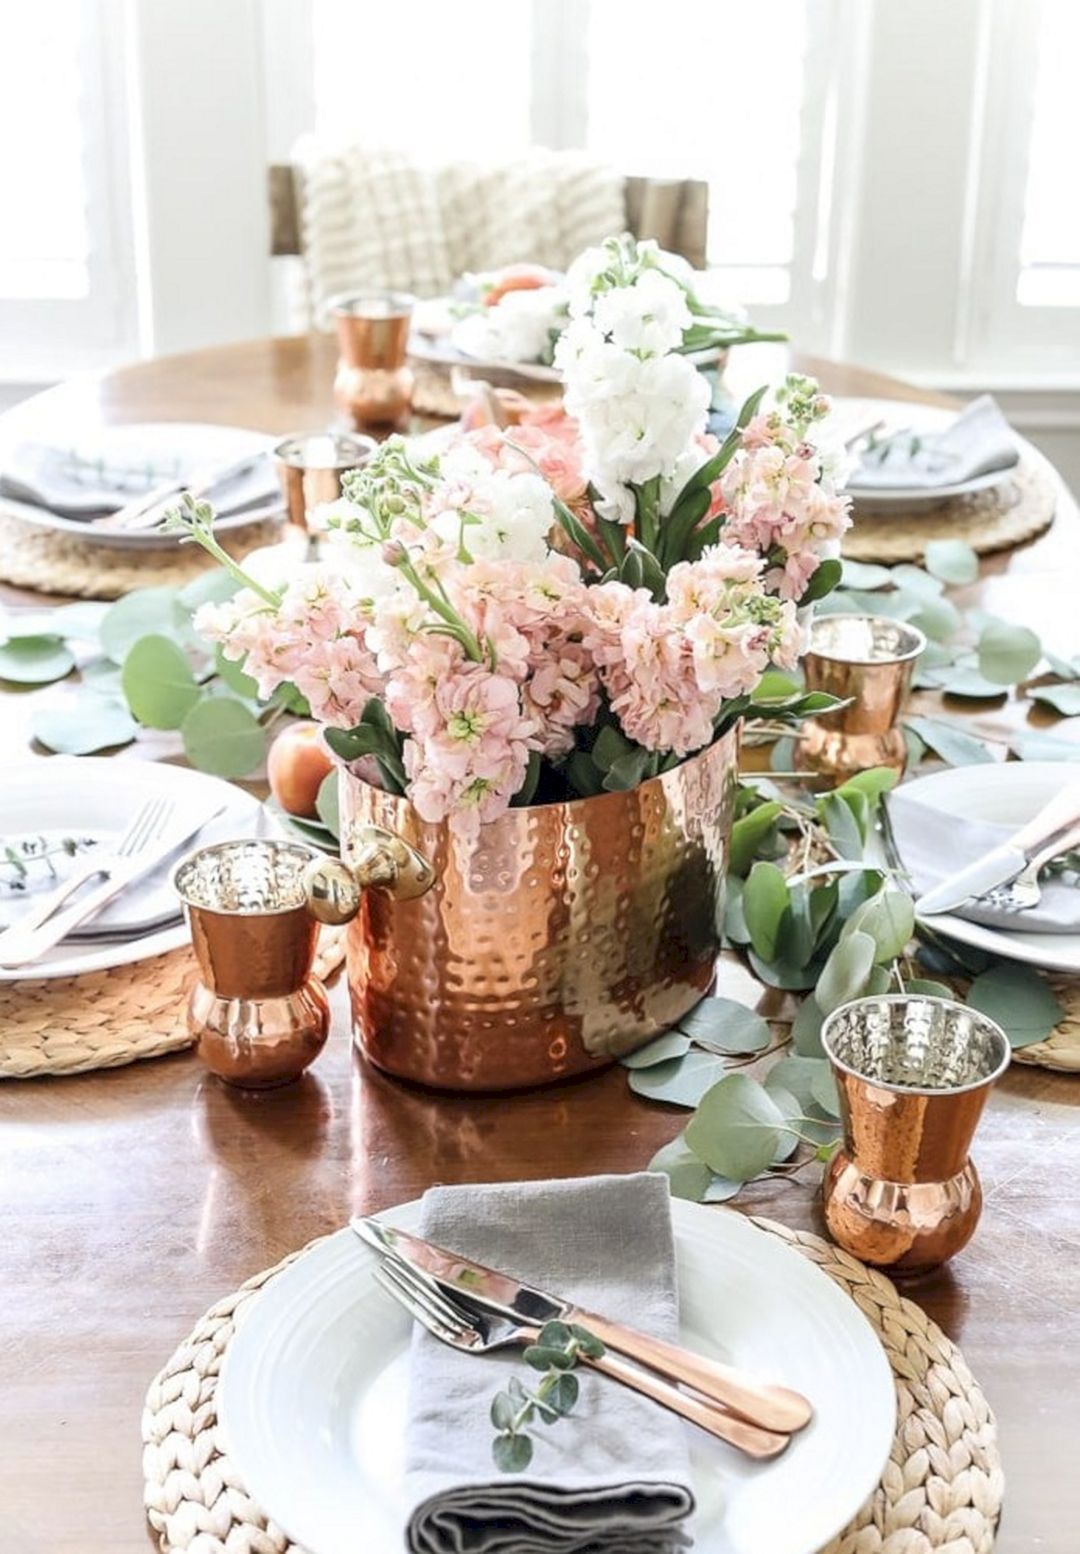 Fancy Thanksgiving Table Decor From Joyfullygrowingblog